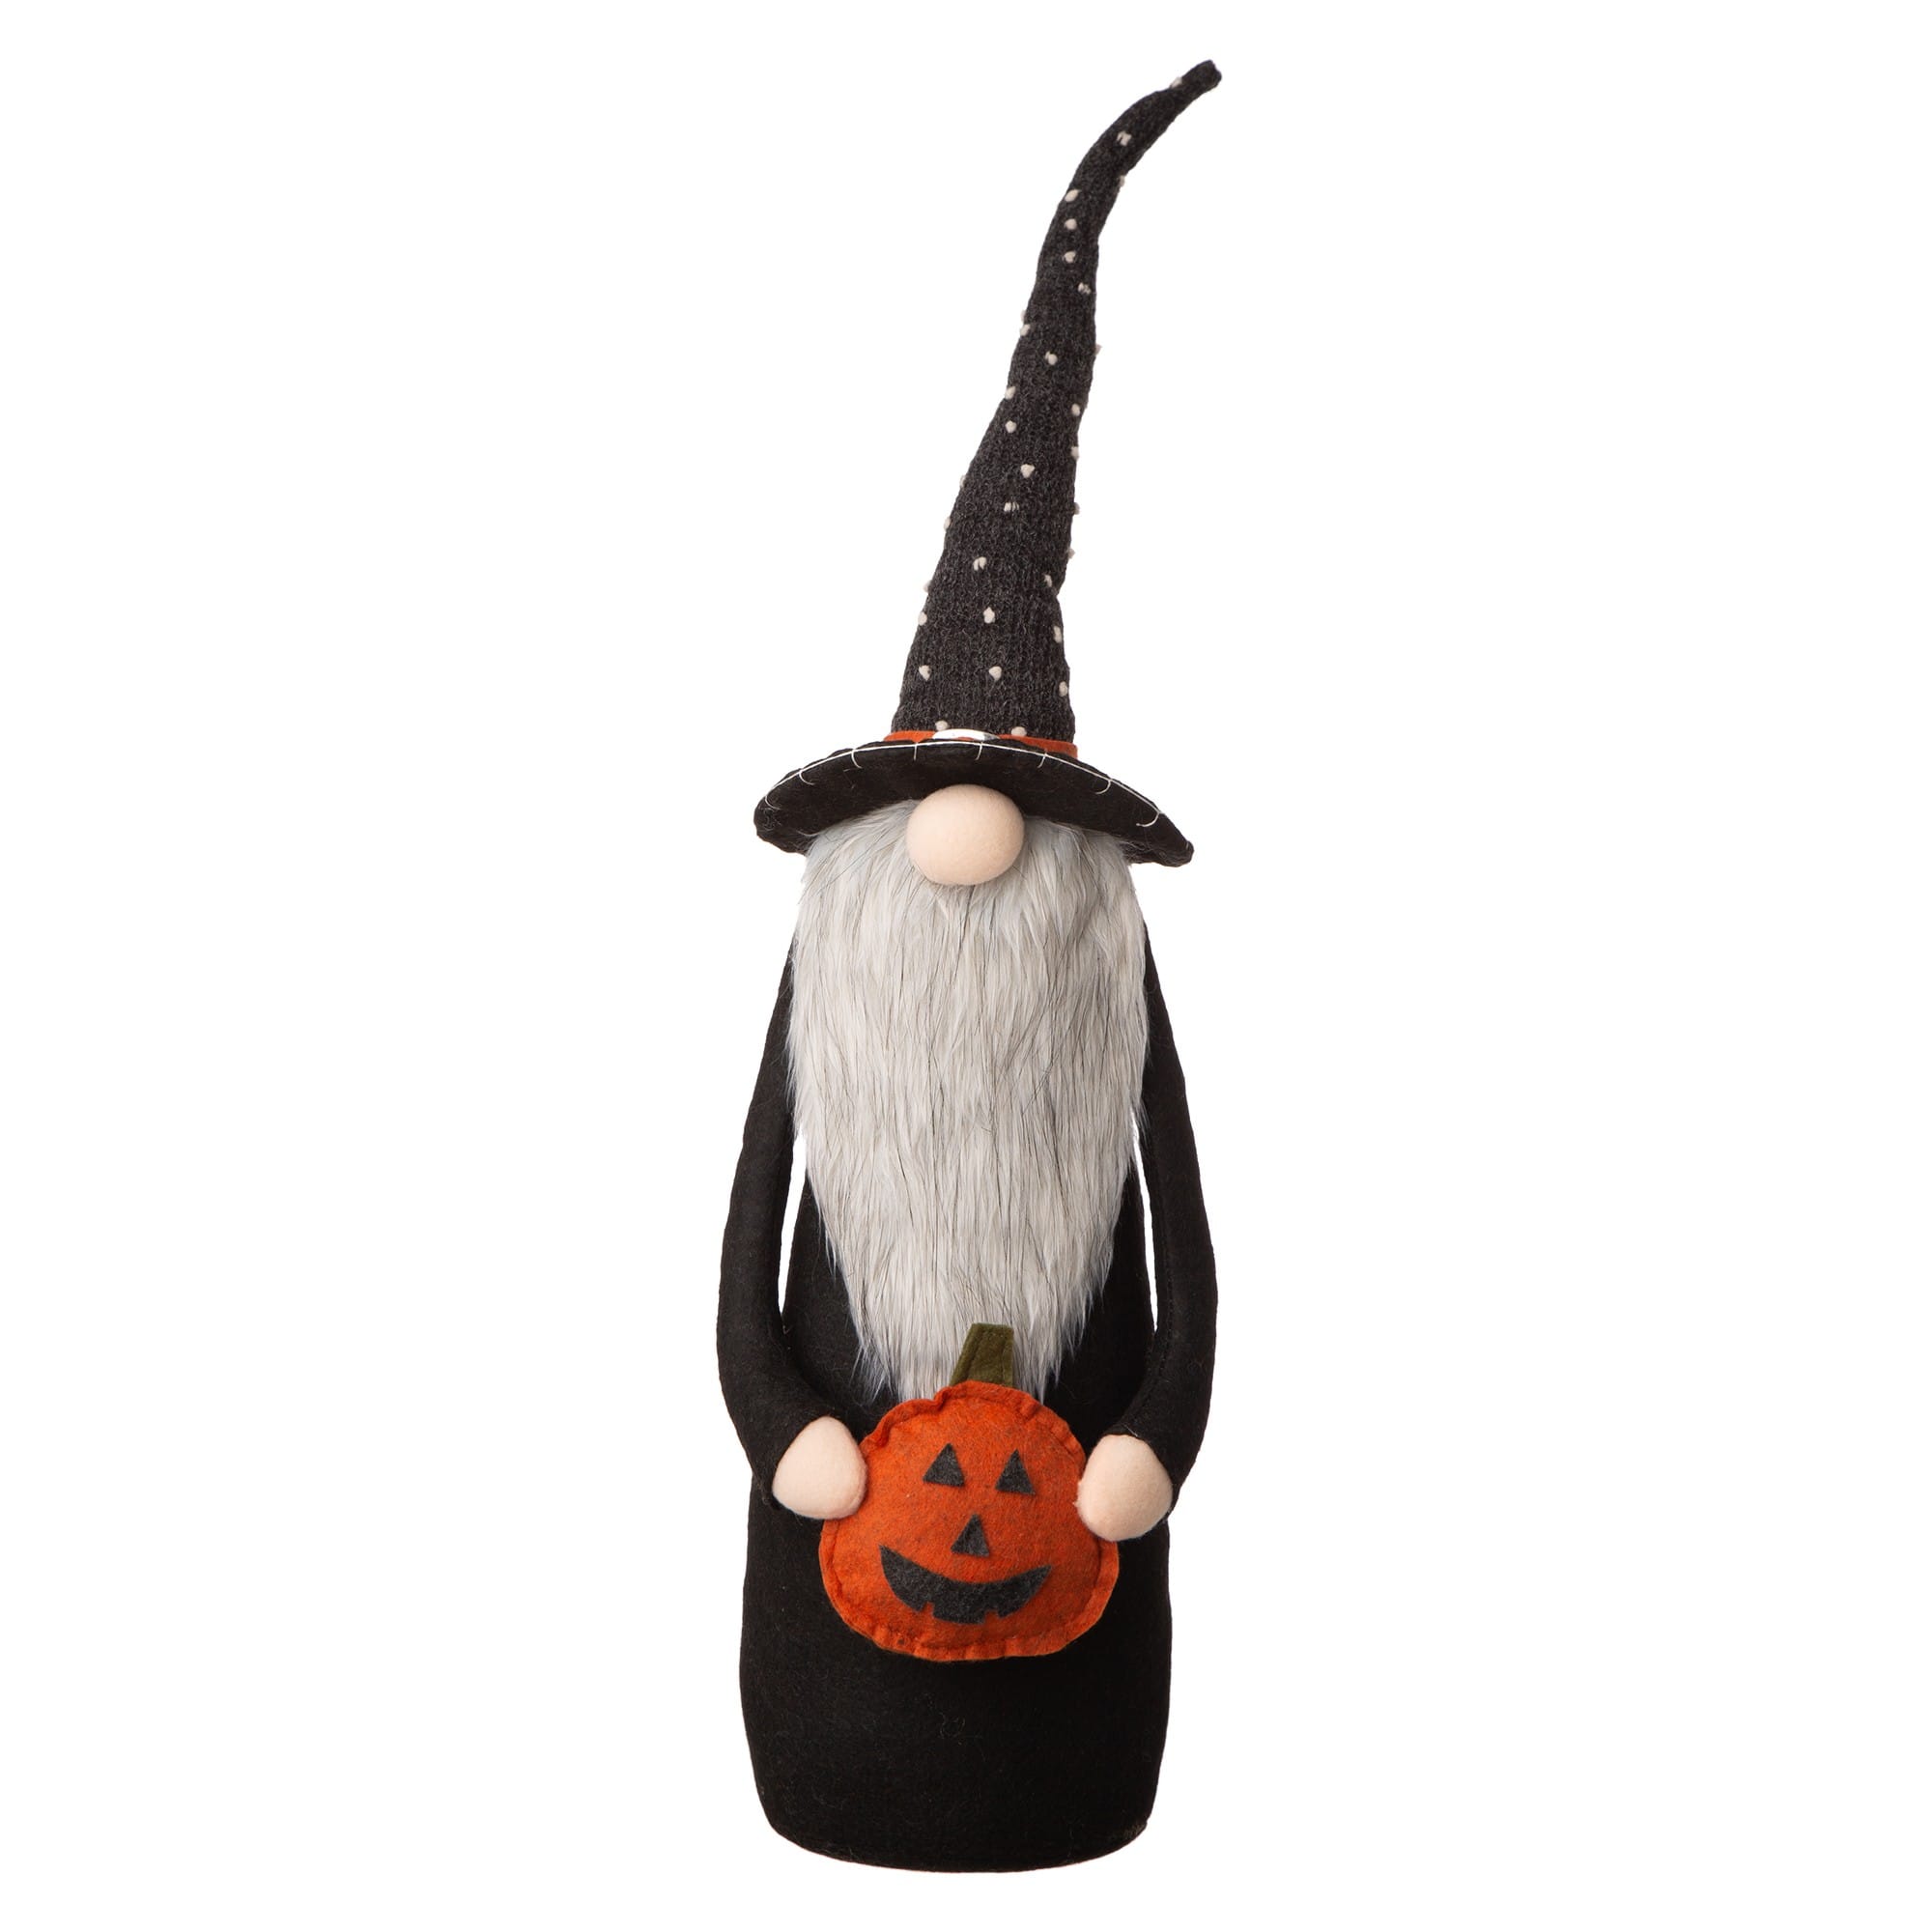 10.31 Sequins Gnome Black Orange Garland Decor 6FT Halloween LAB NO 